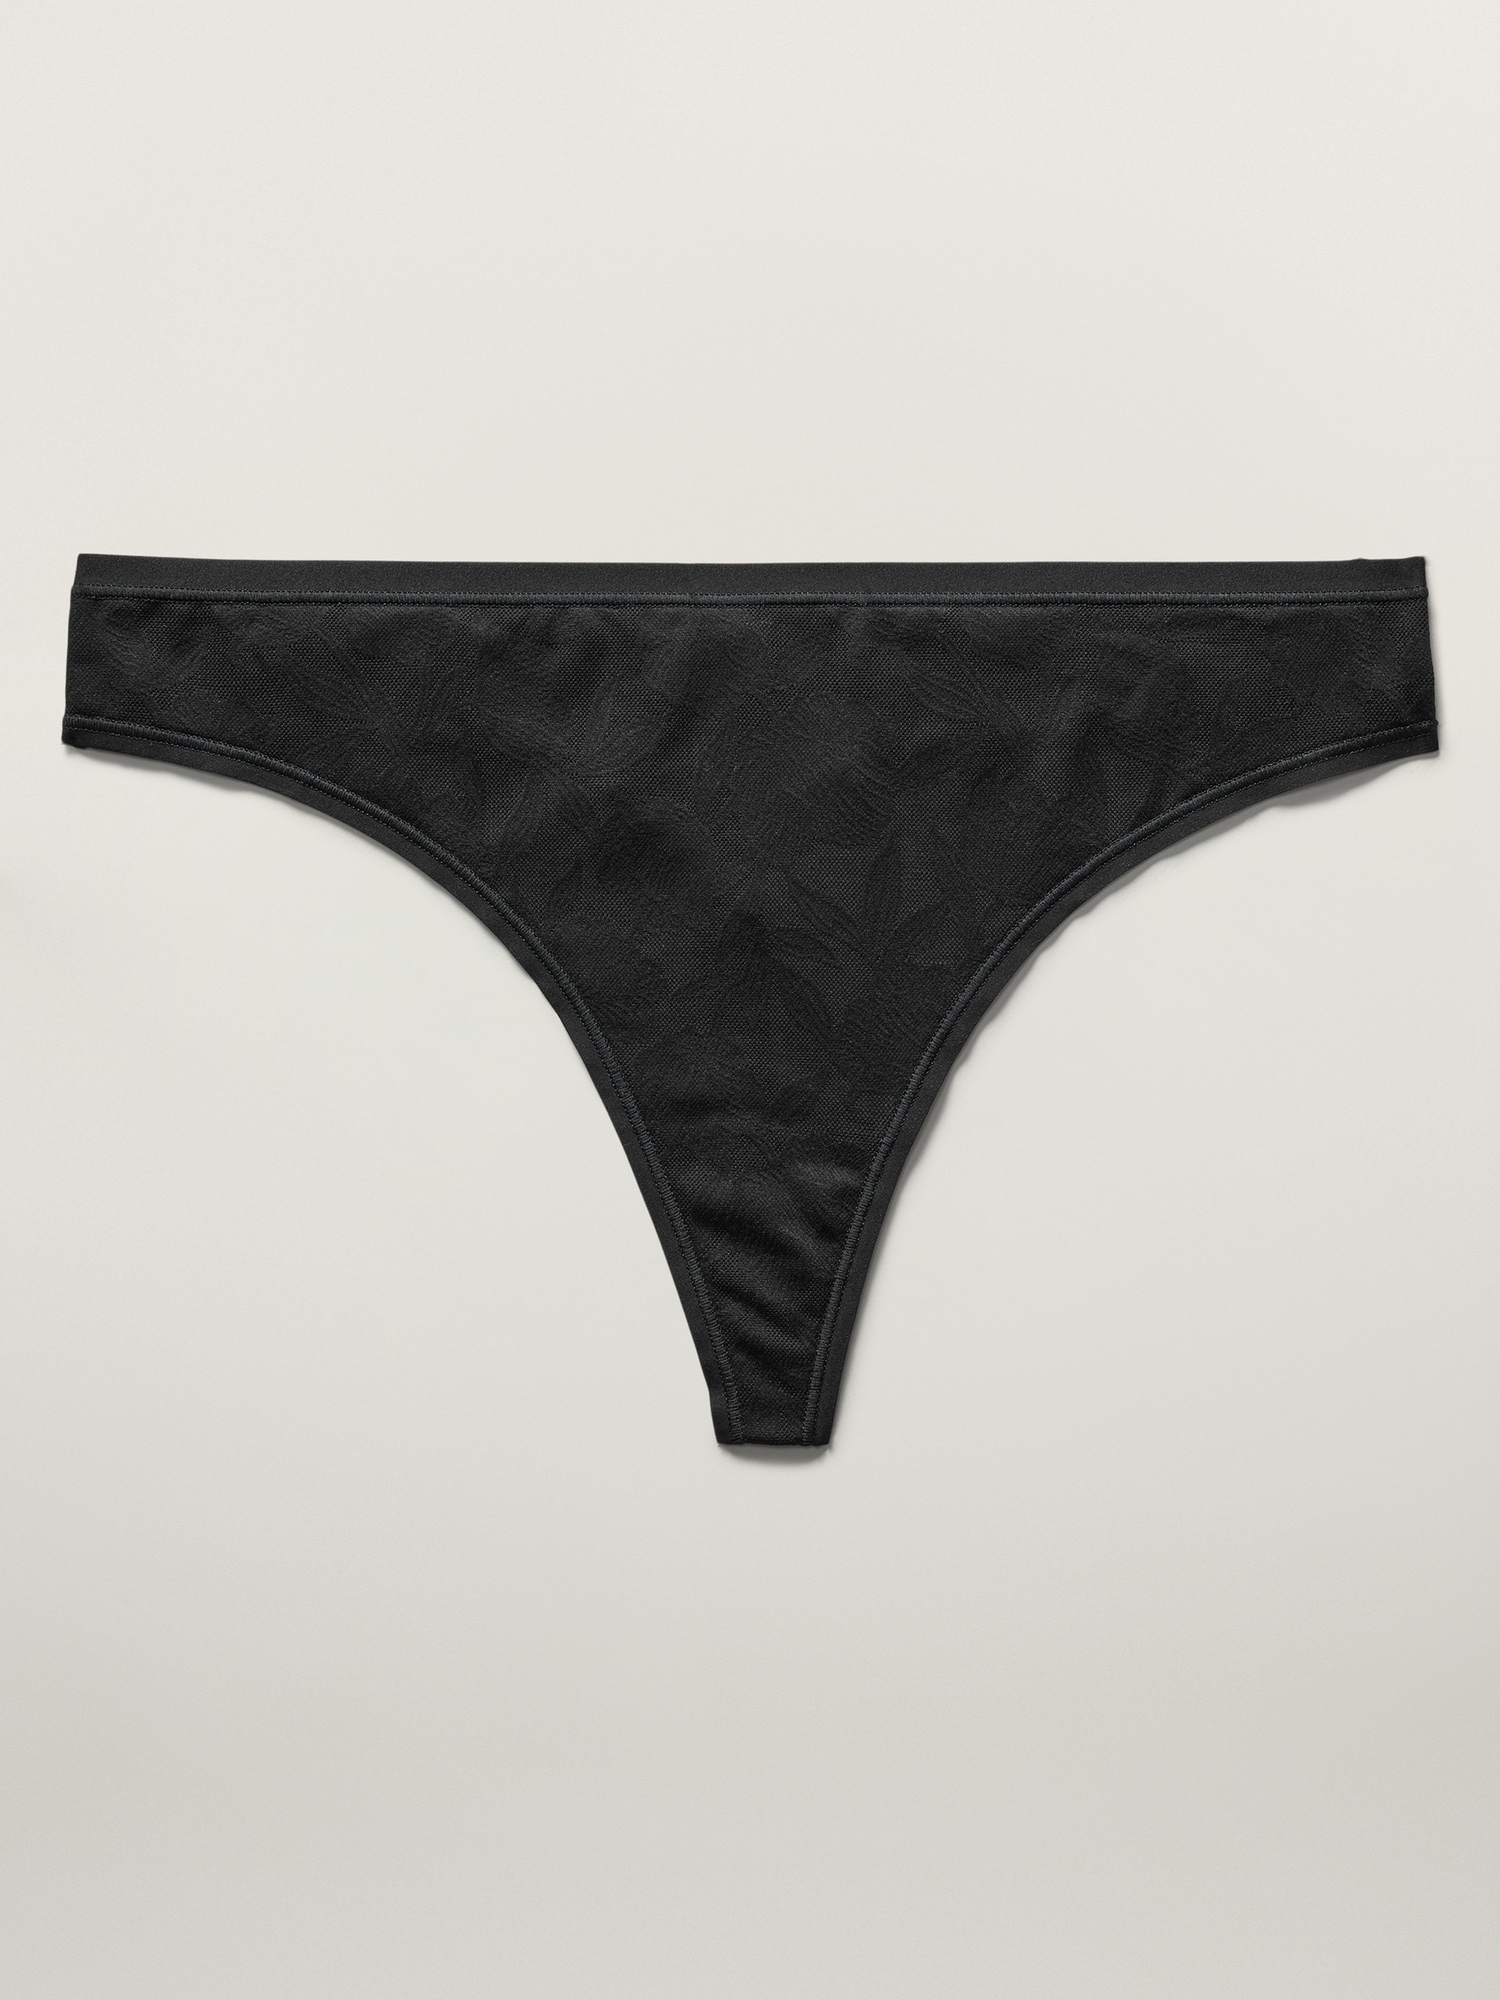 Athleta Ritual Thong Underwear In Black Lace